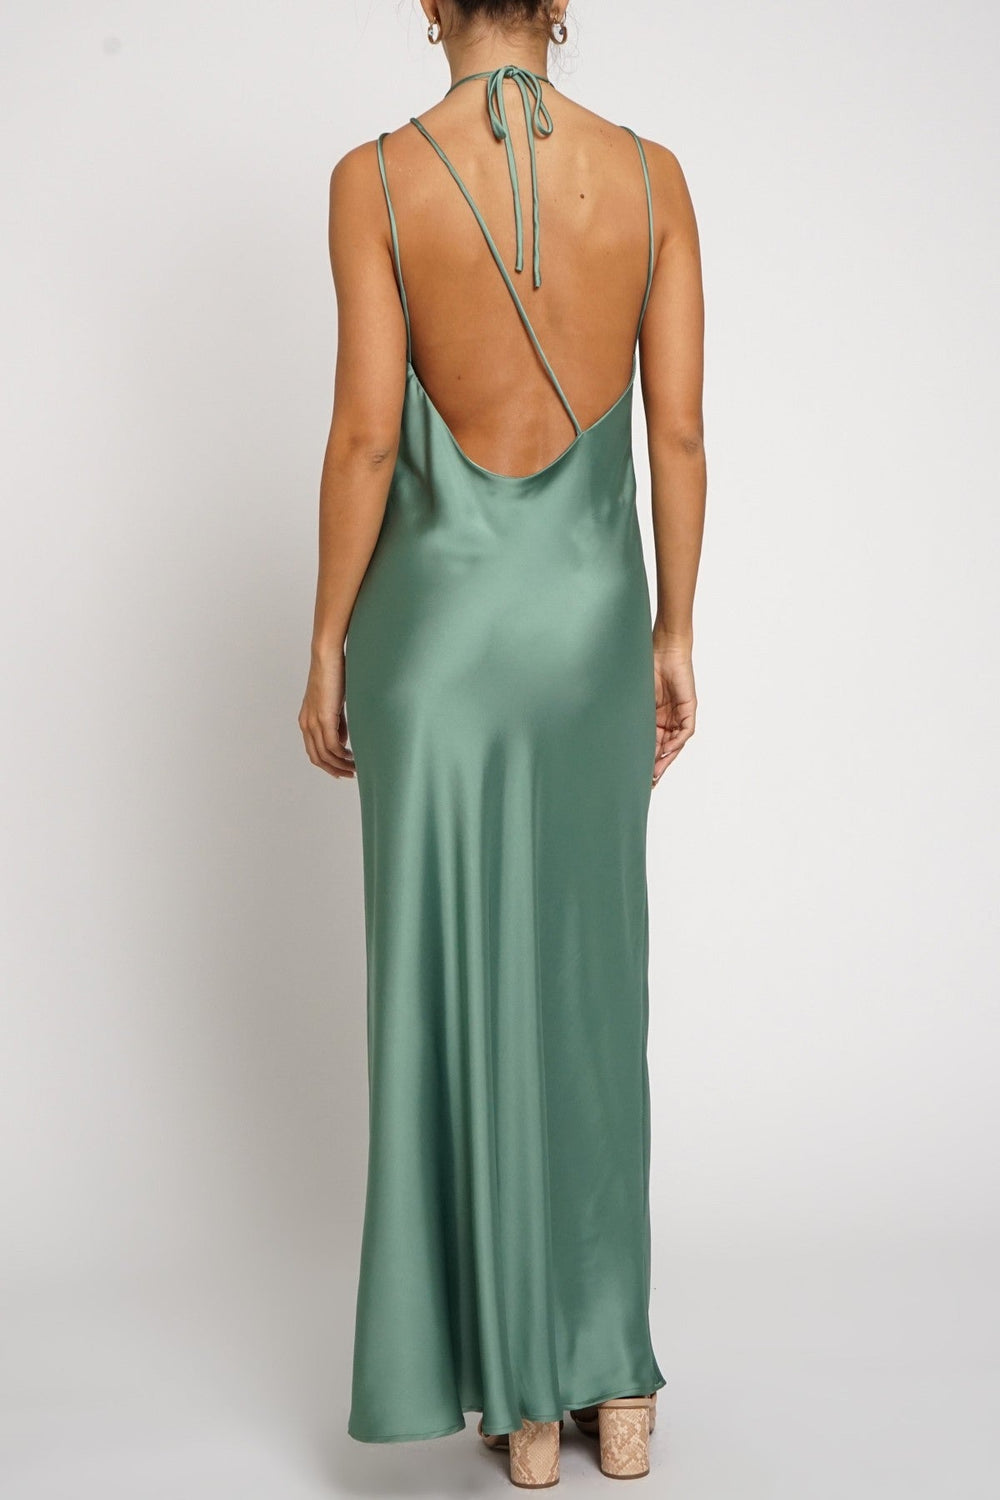 Tamara - verde - Lend the Trend renta de vestidos mexico